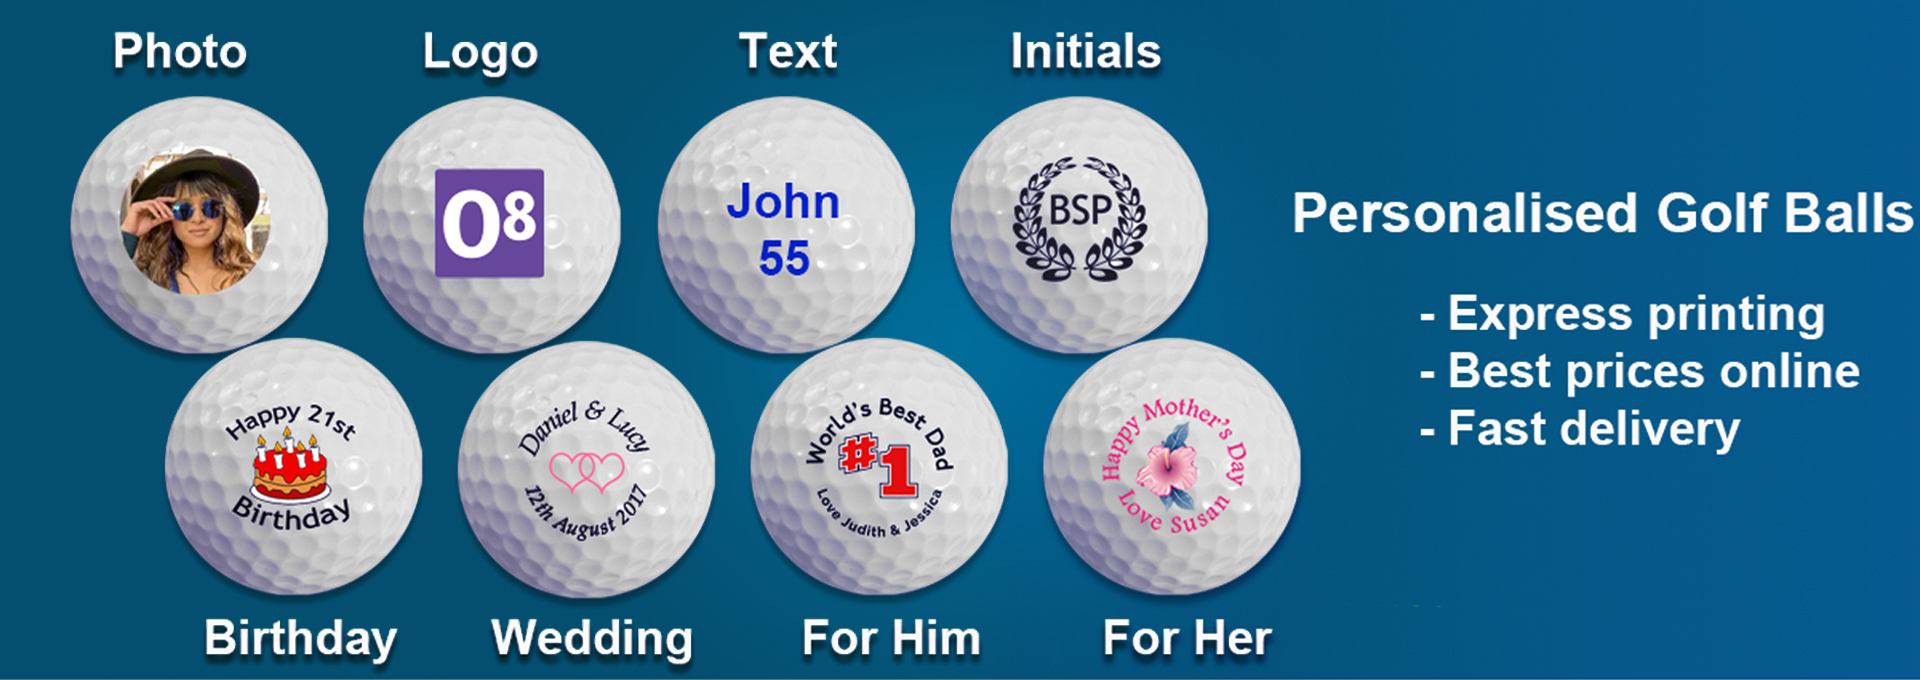 Photo, logo and text printed golf balls